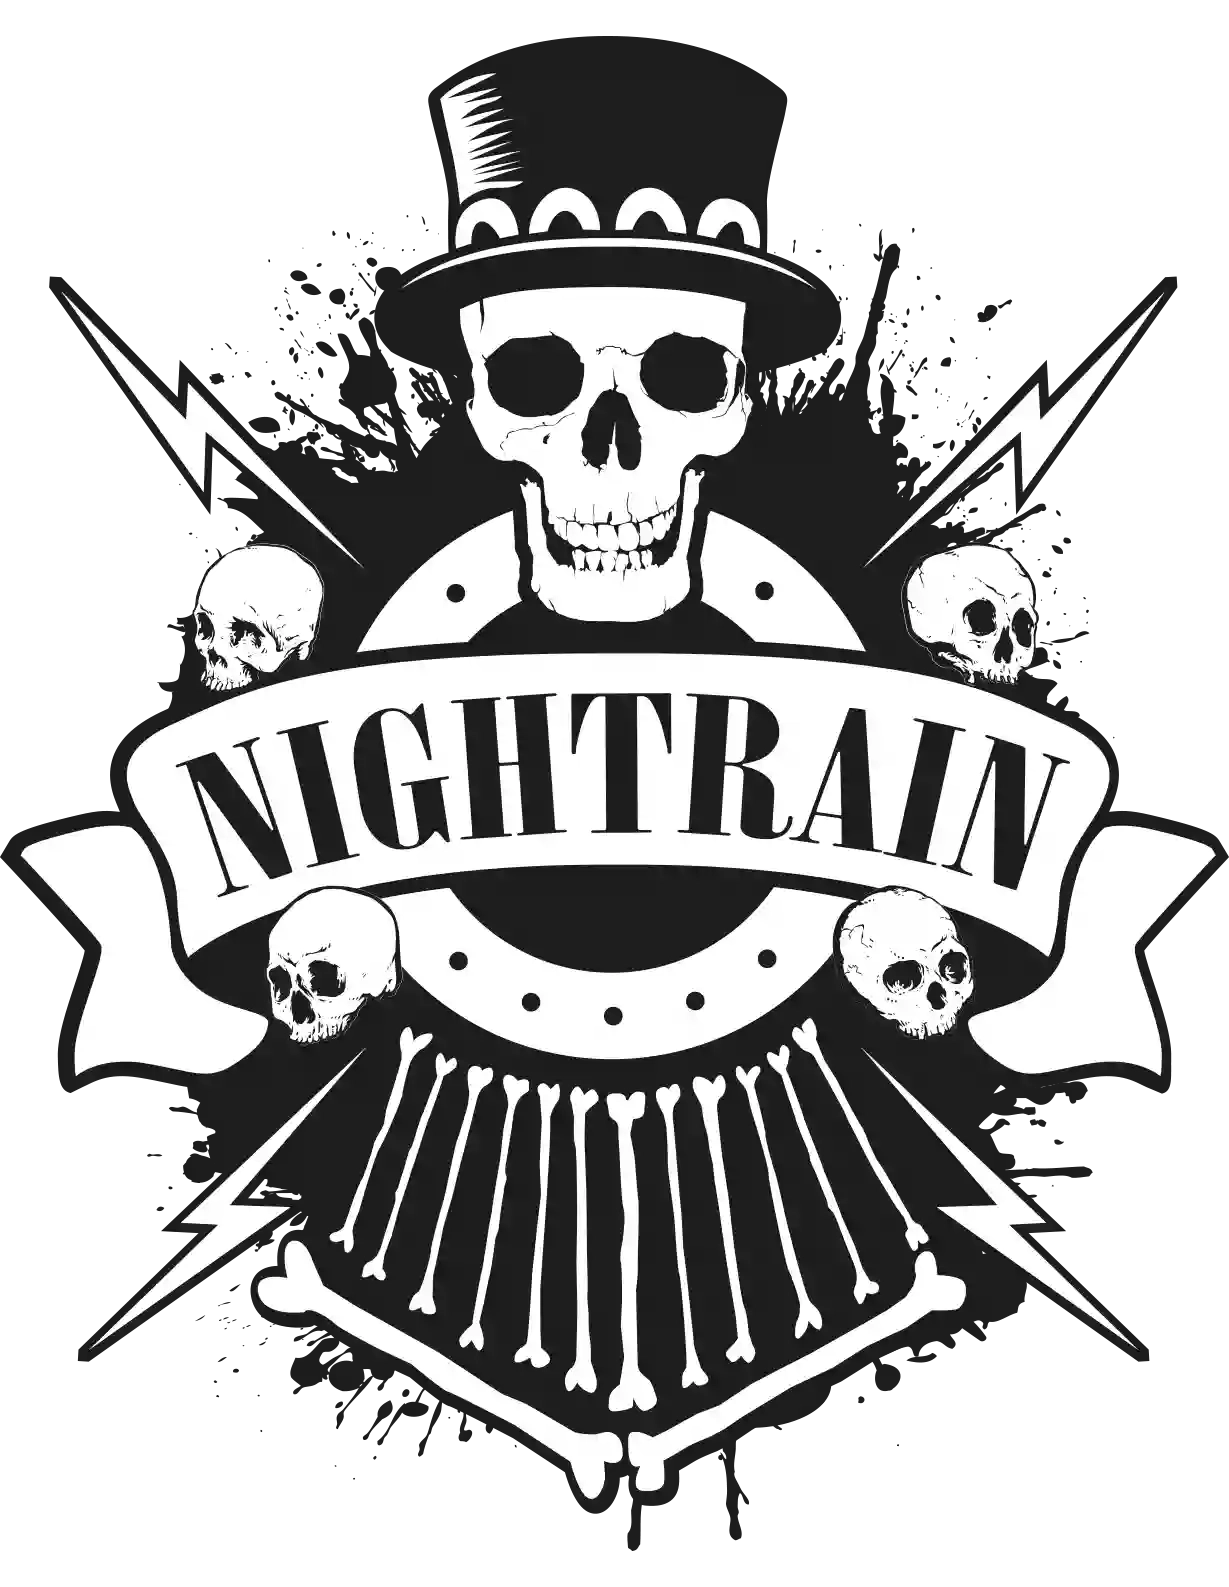 Nightrain